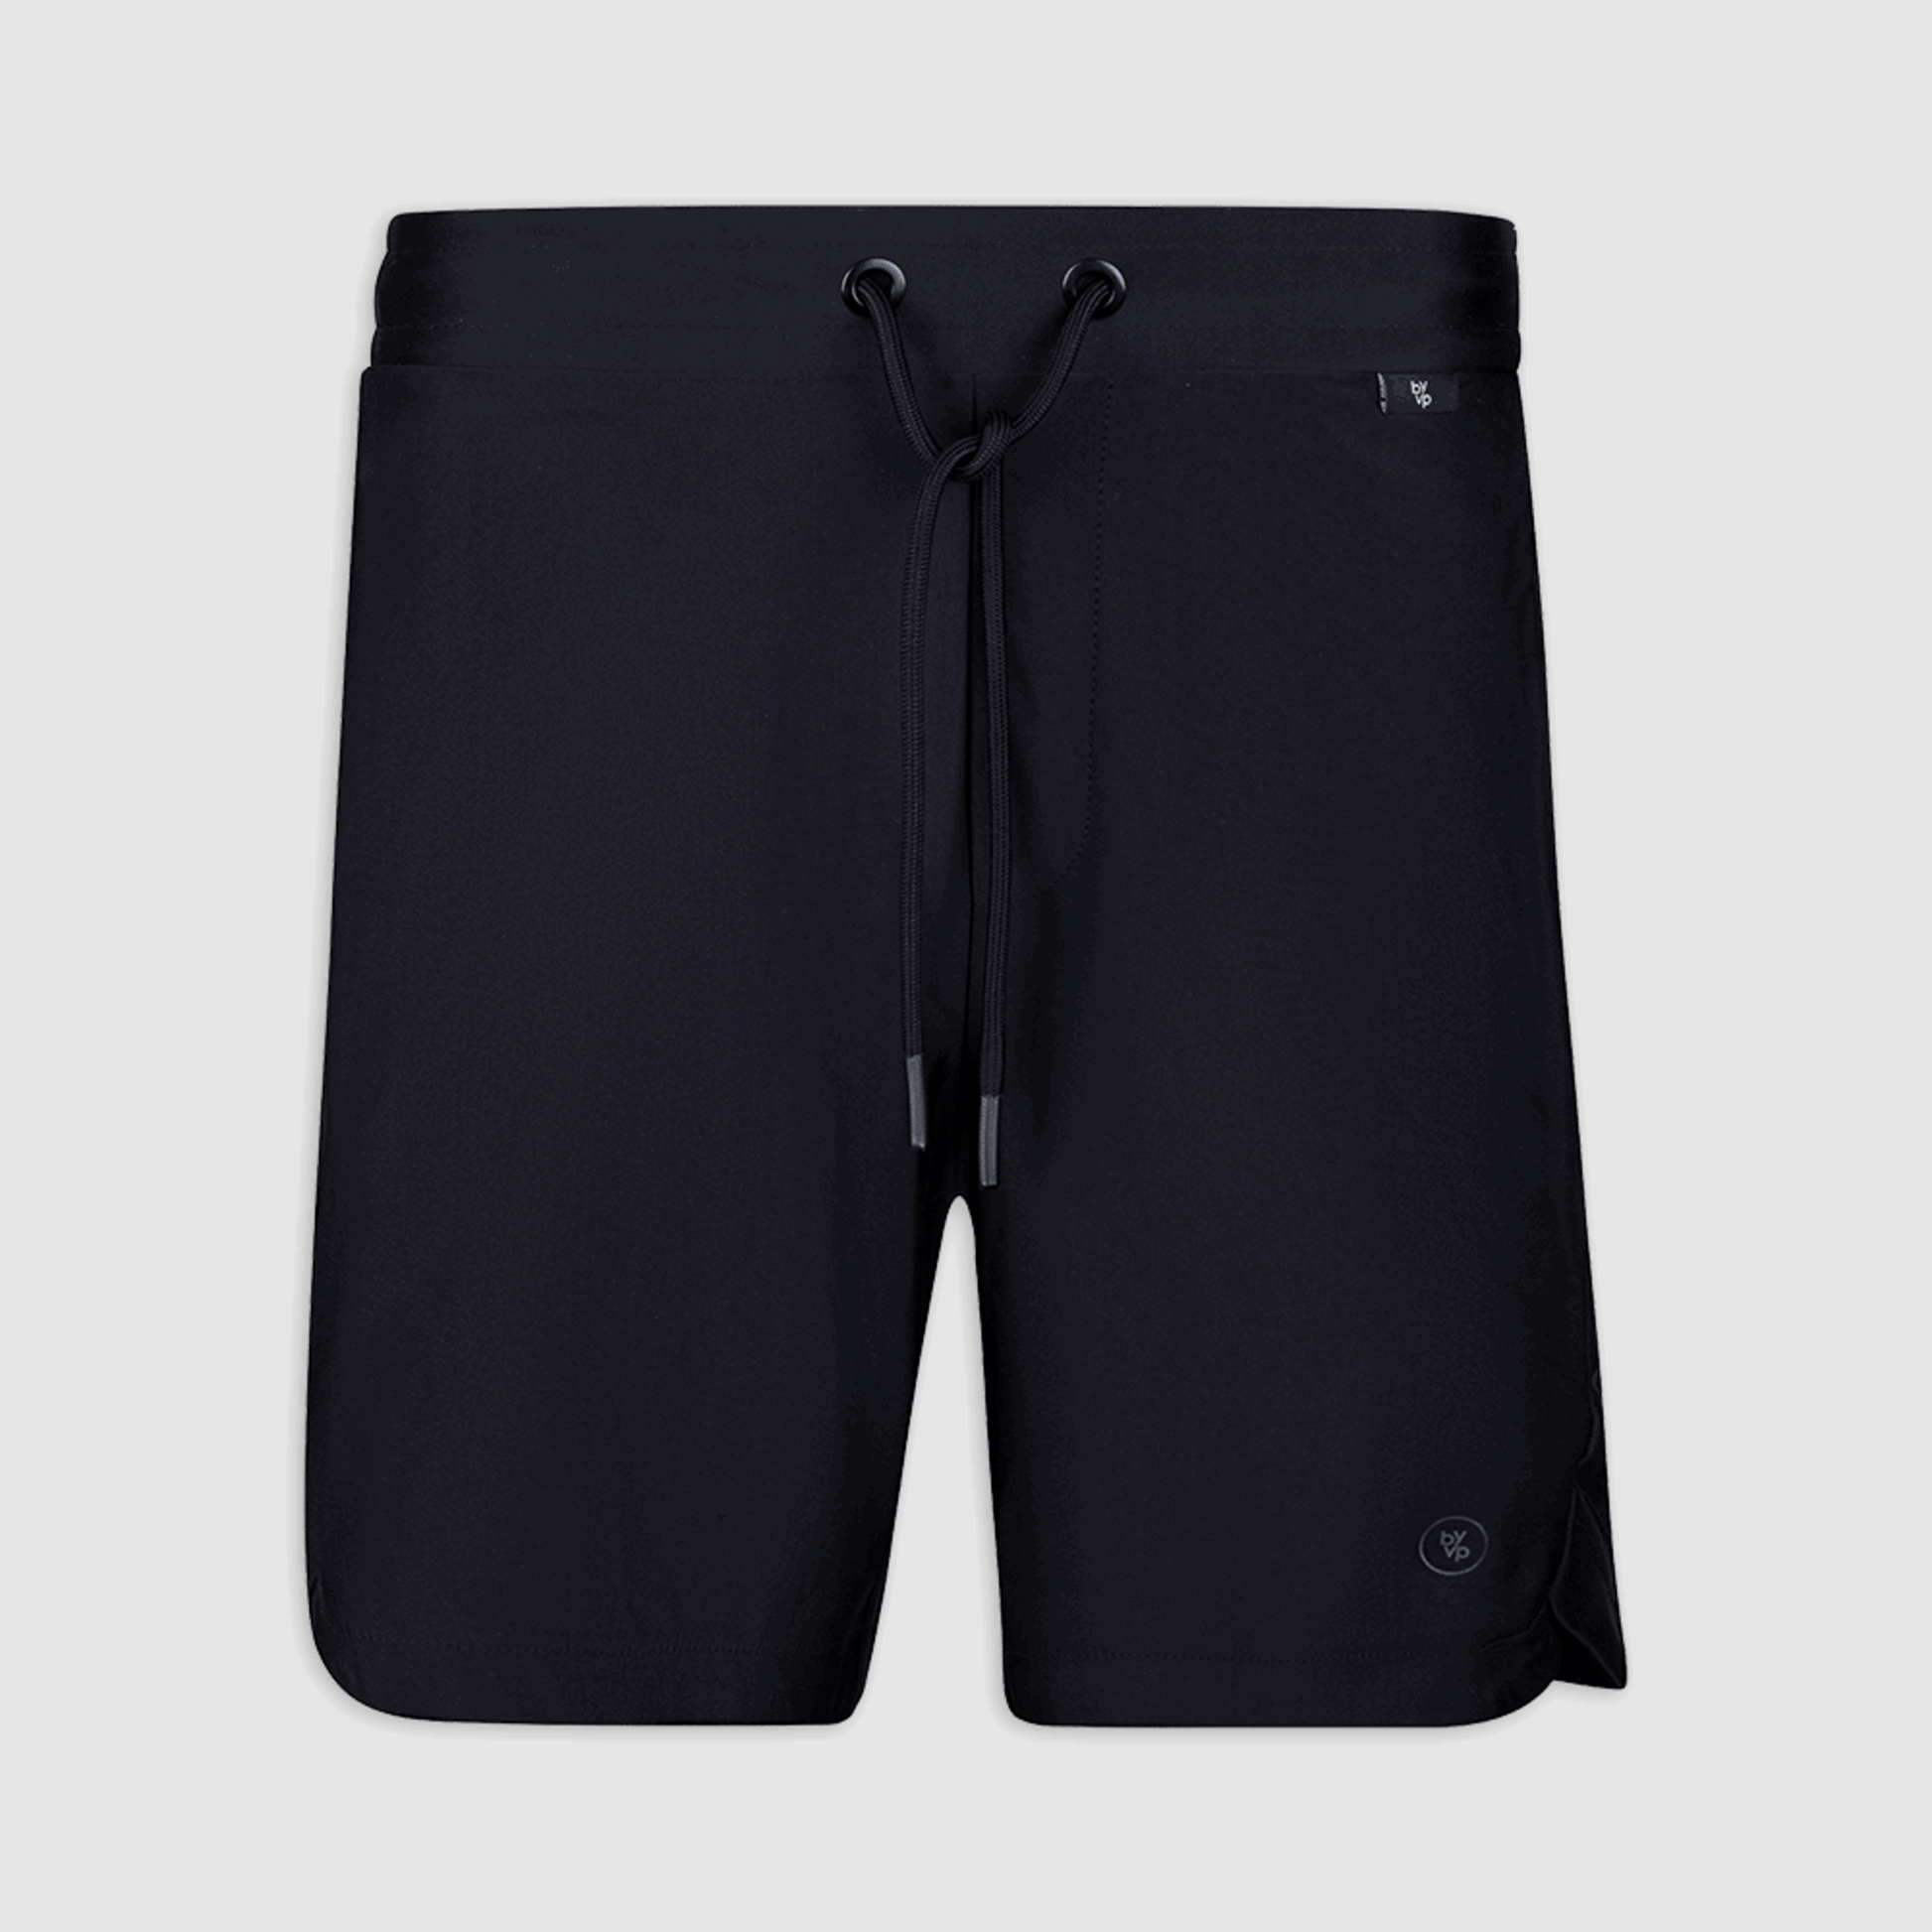 Pantaloncini ByVP Padel Jersey Short Black, immagine frontale con logo